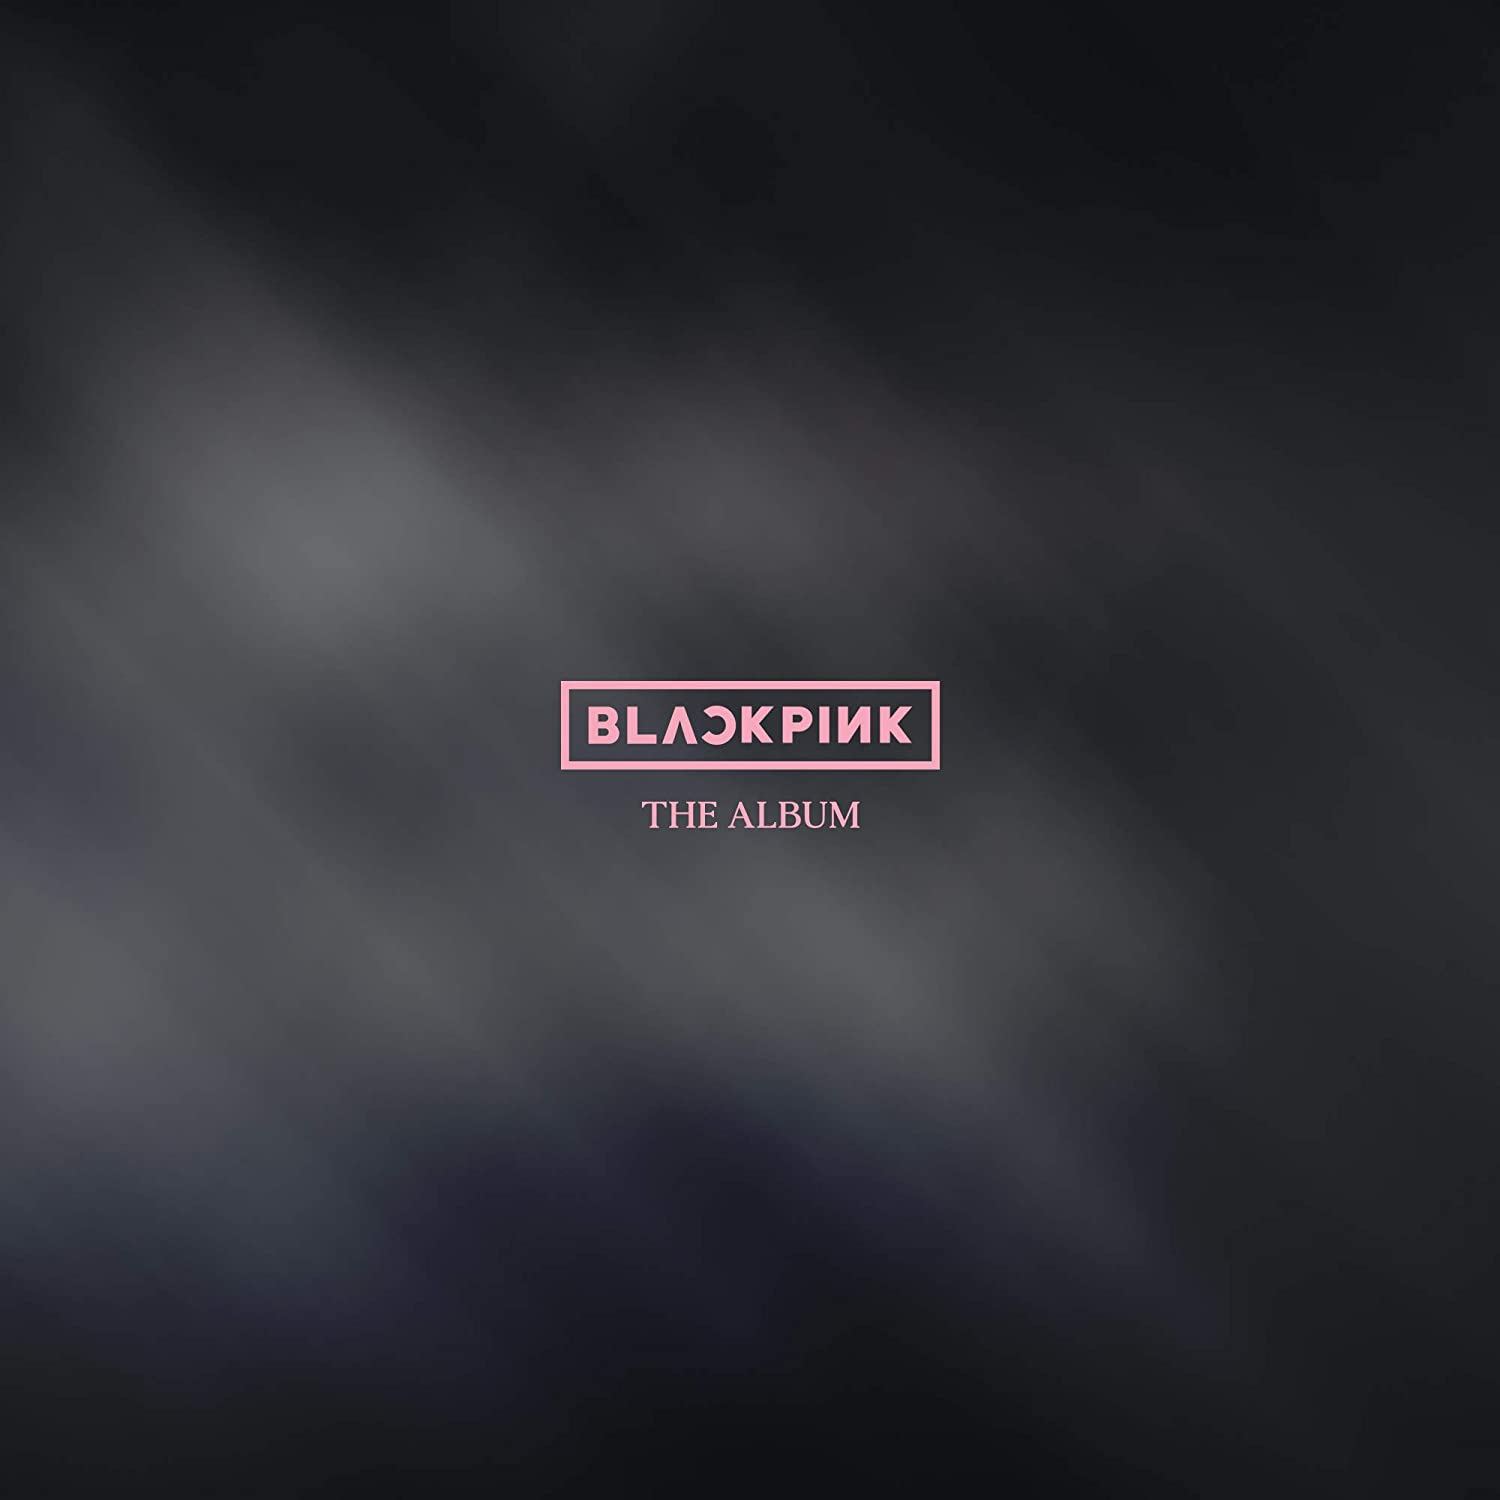 Blackpink - The Album (Version 3) (Blackpink)